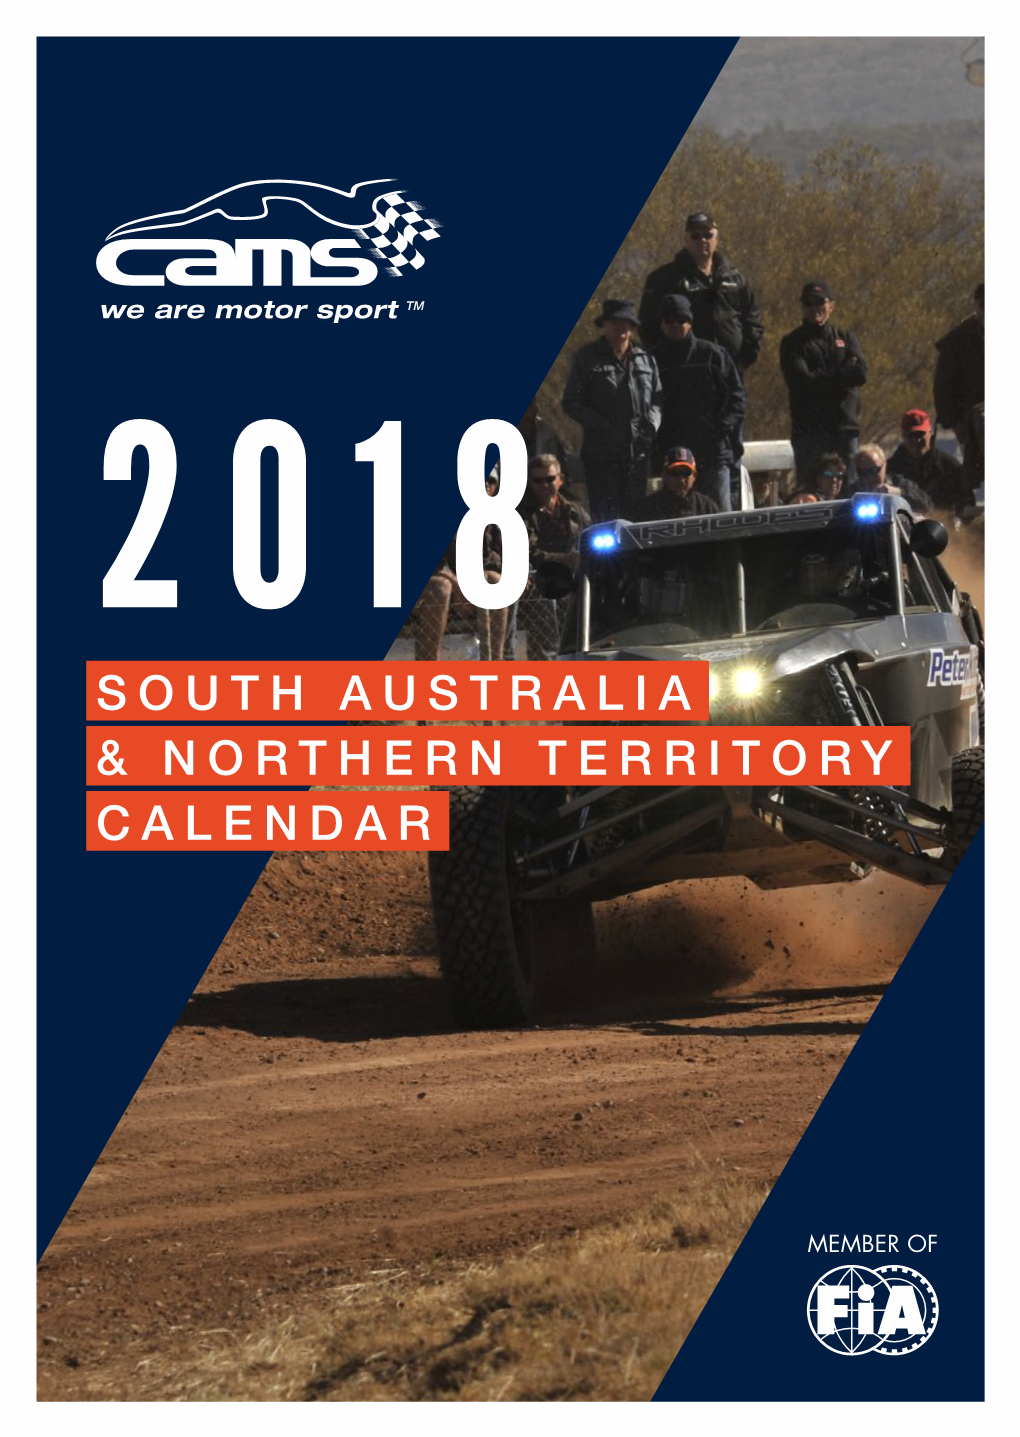 South Australia & Northern Territory Calendar